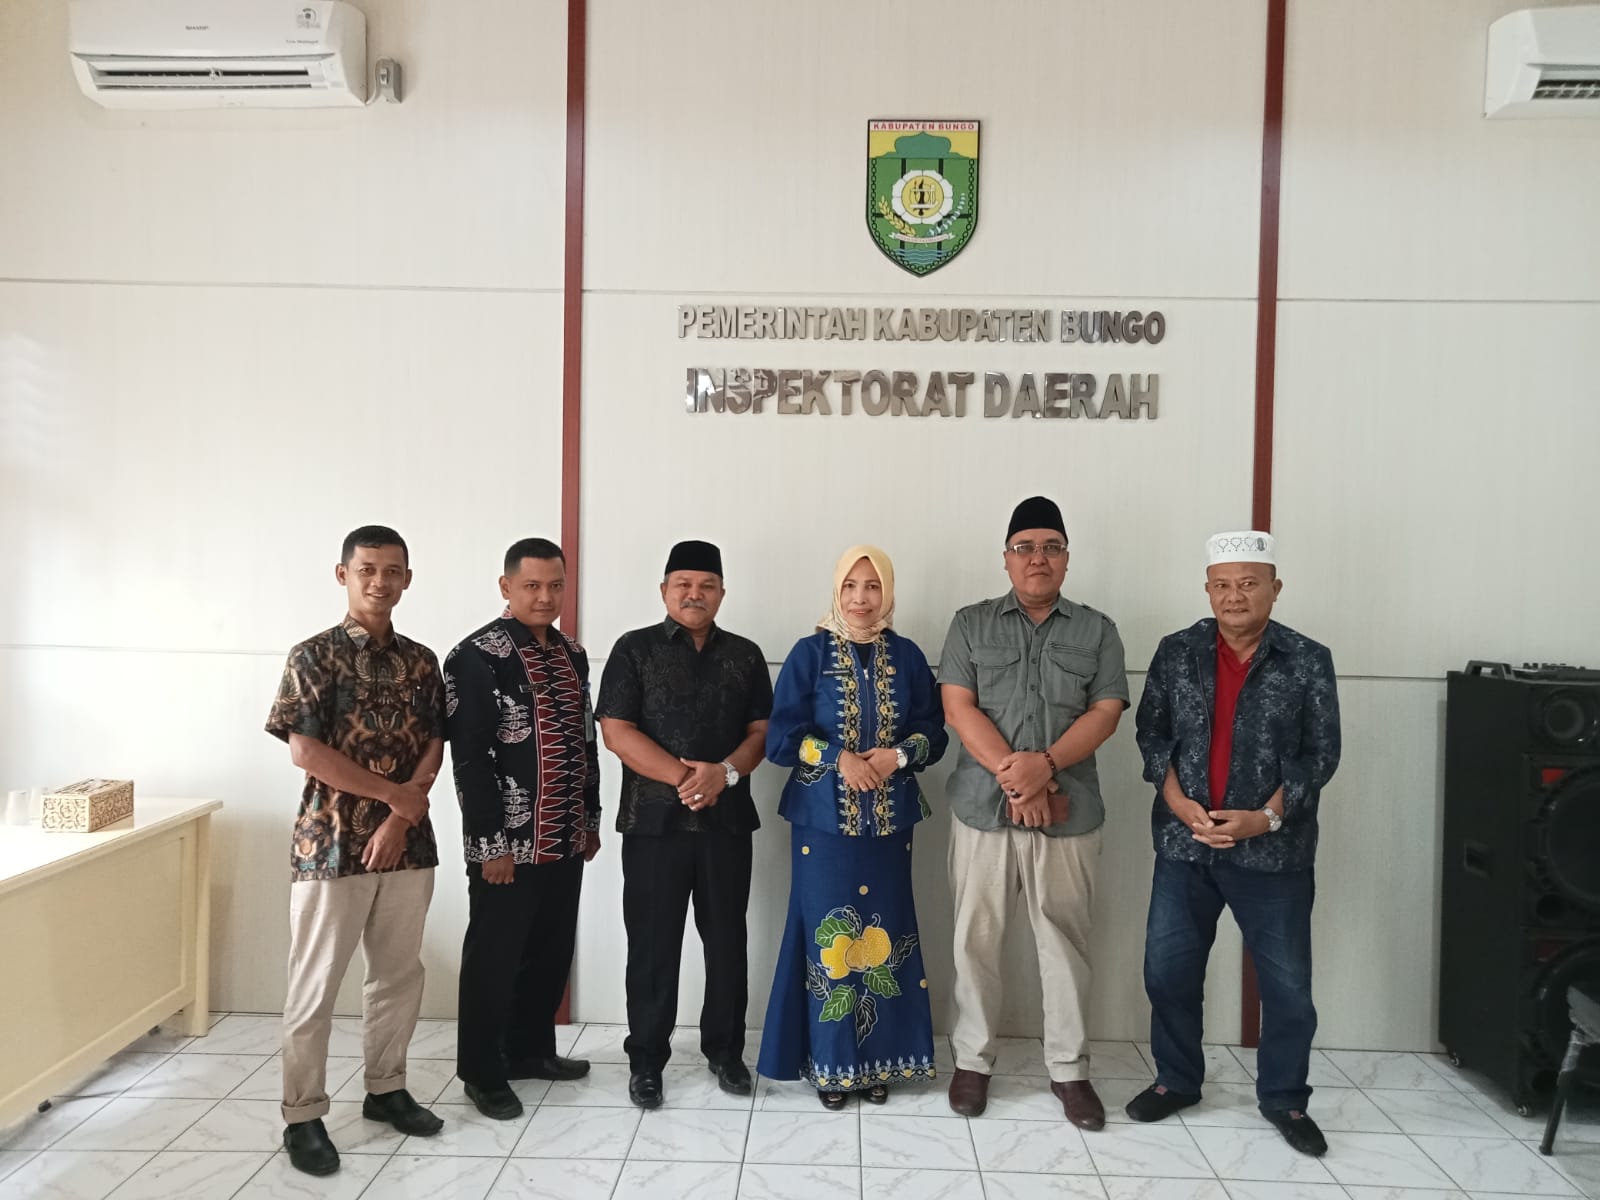  Inspektur Daerah Kab. Bungo Menerima Kunjungan Kerja Ketua Komisi I DPRD Kab. Pasaman Barat